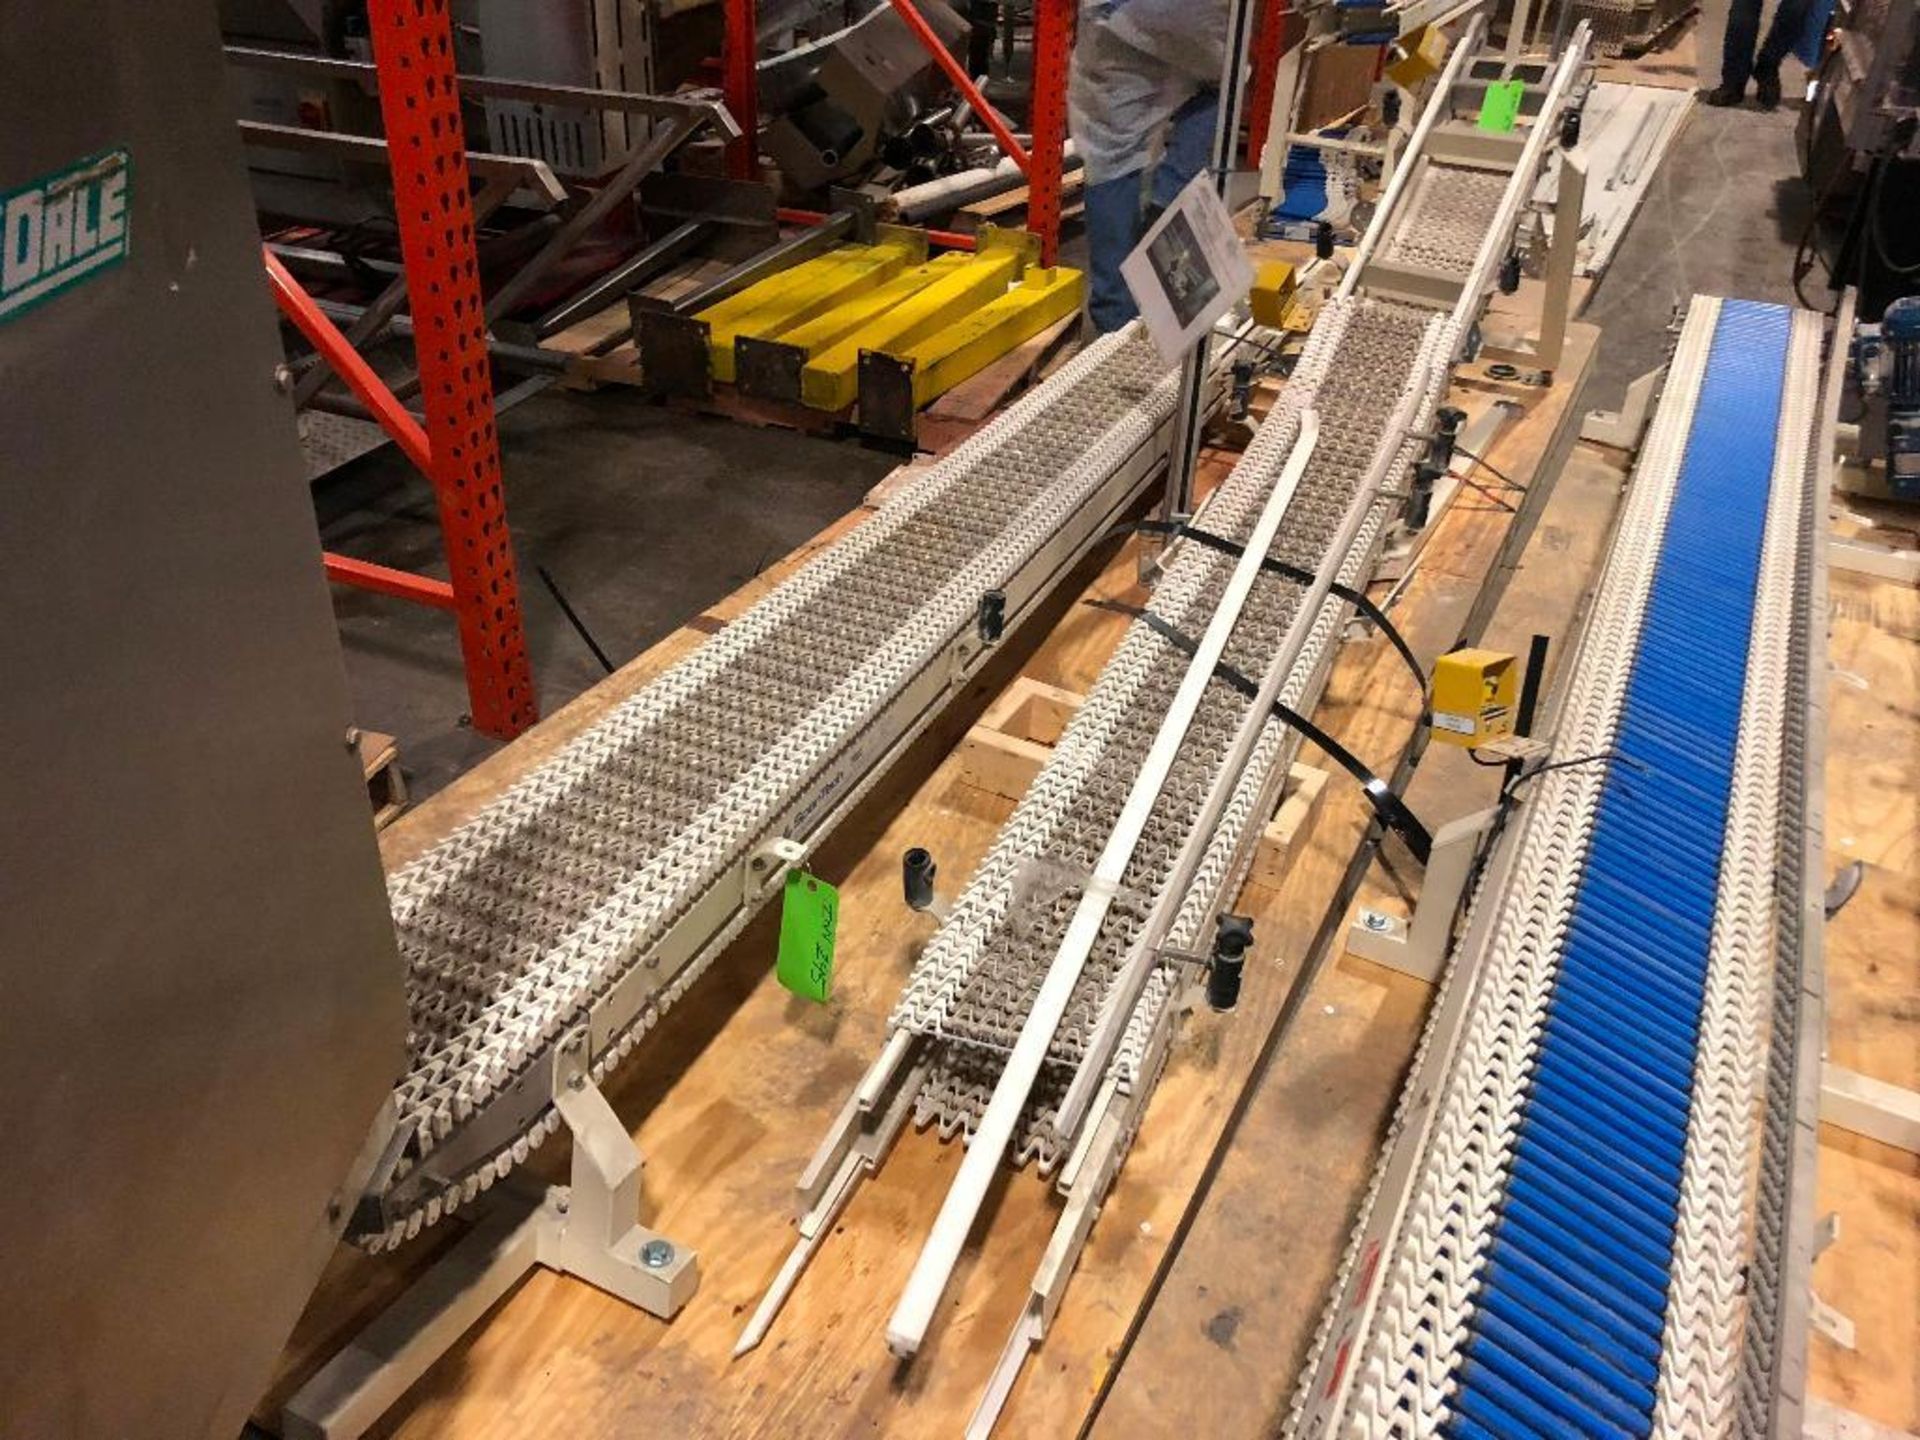 Spantech mild steel conveyor, 23 ft. long x 11 in. wide x 36 in. tall, gripper style belt, motor and